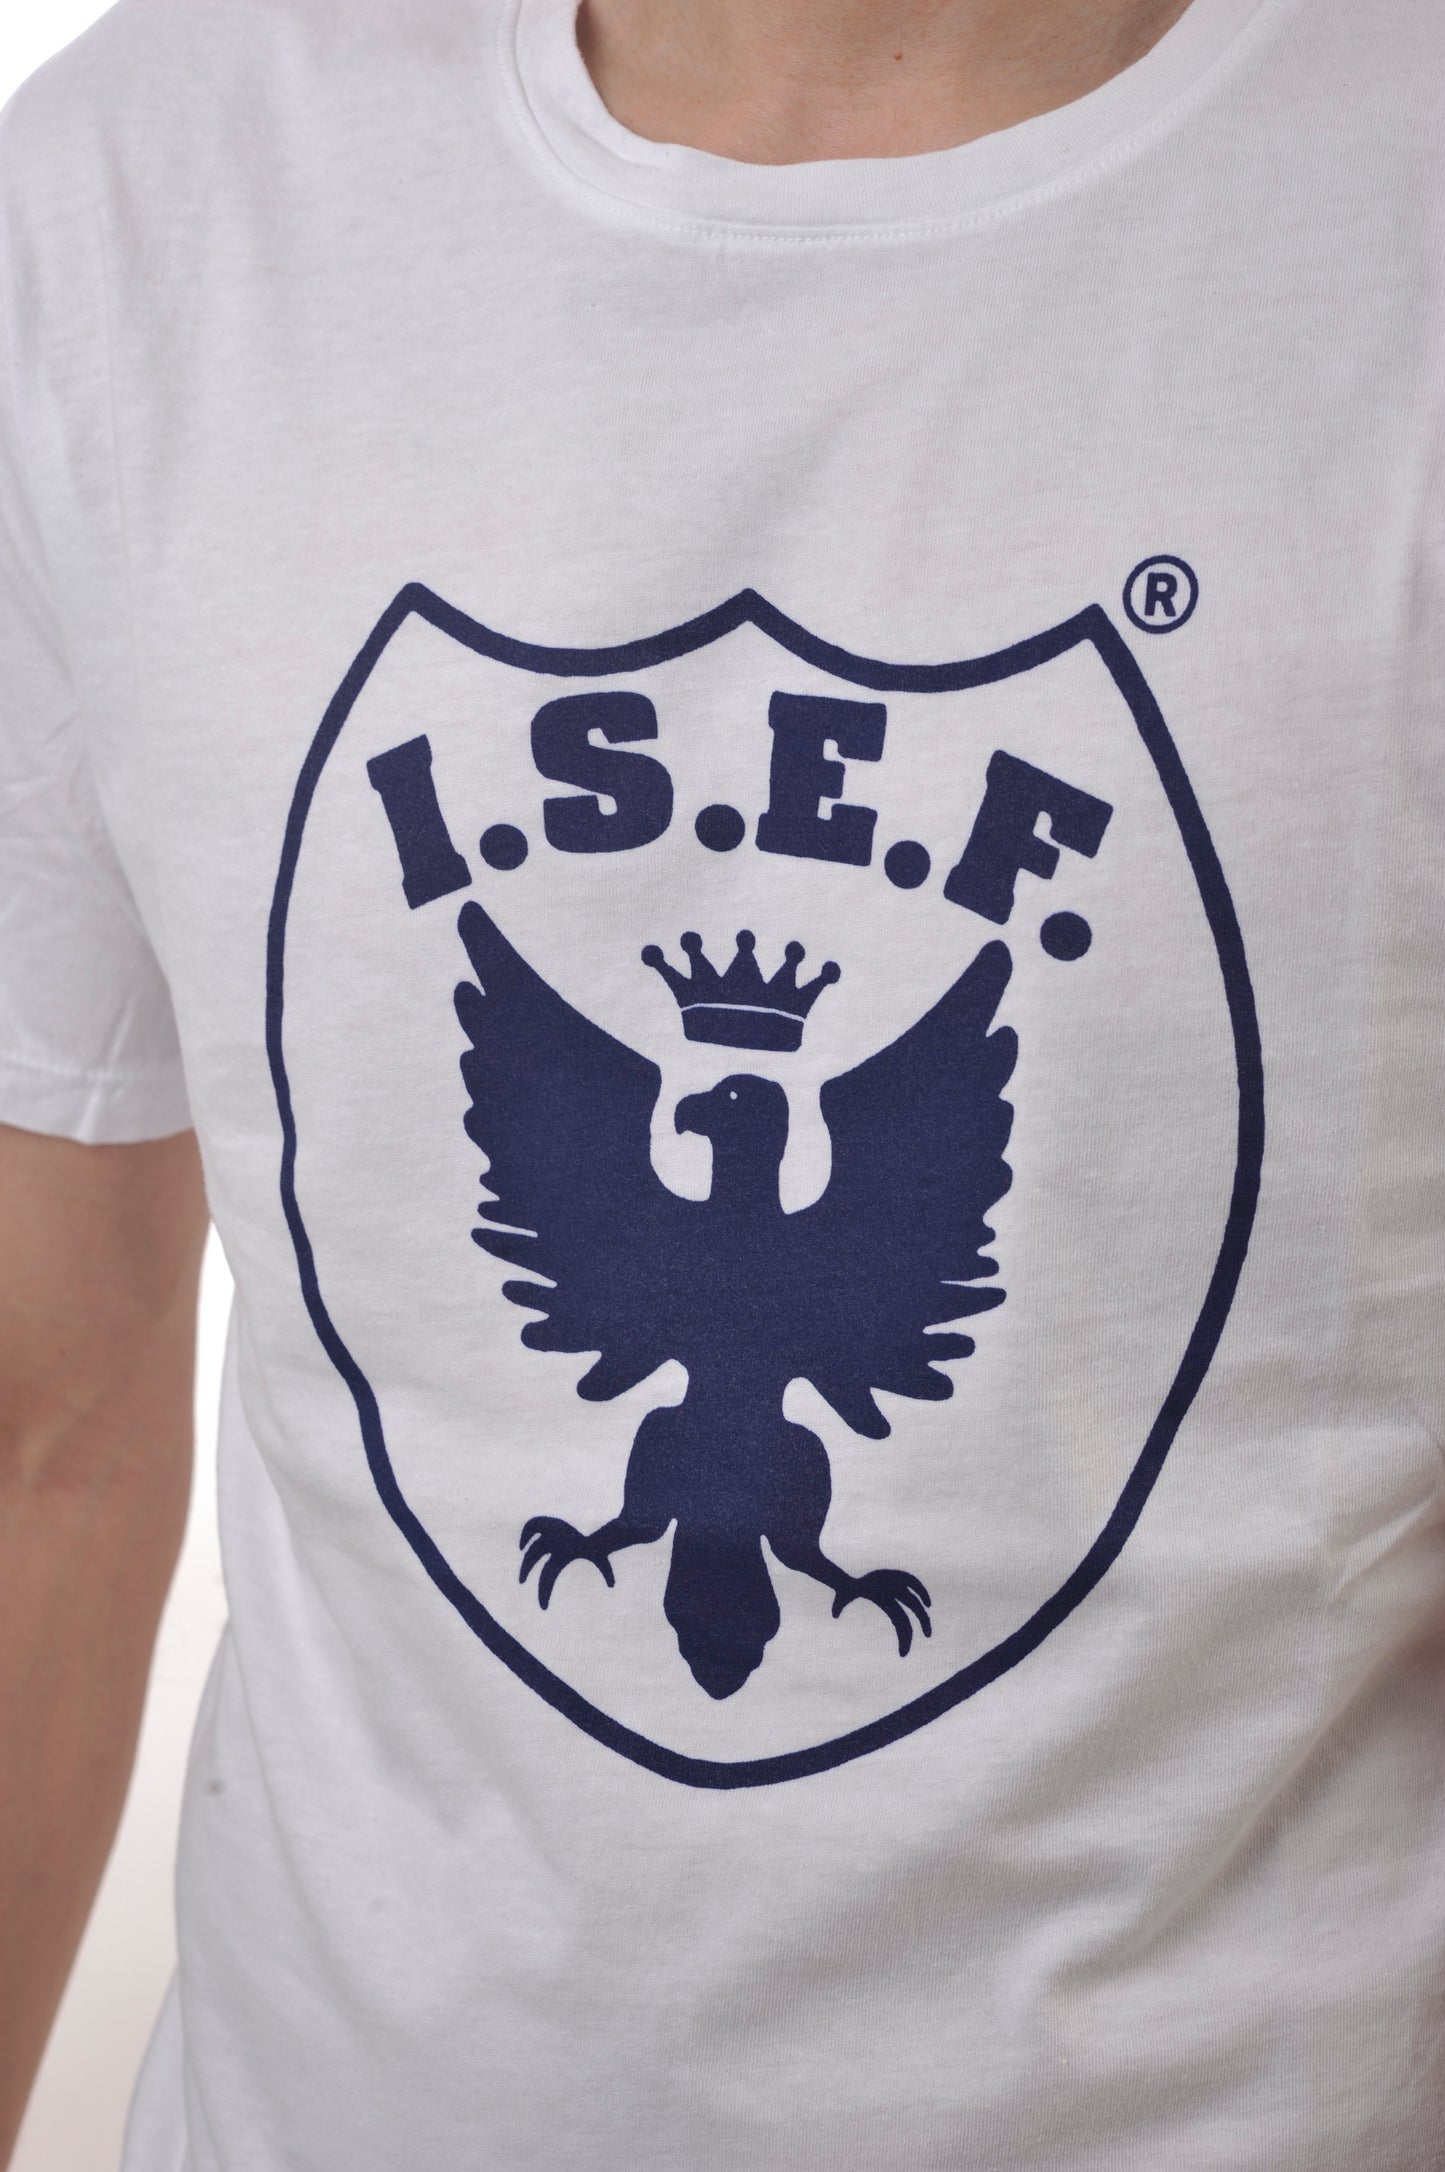 ISEF1952 - White - Bologna T-Shirt